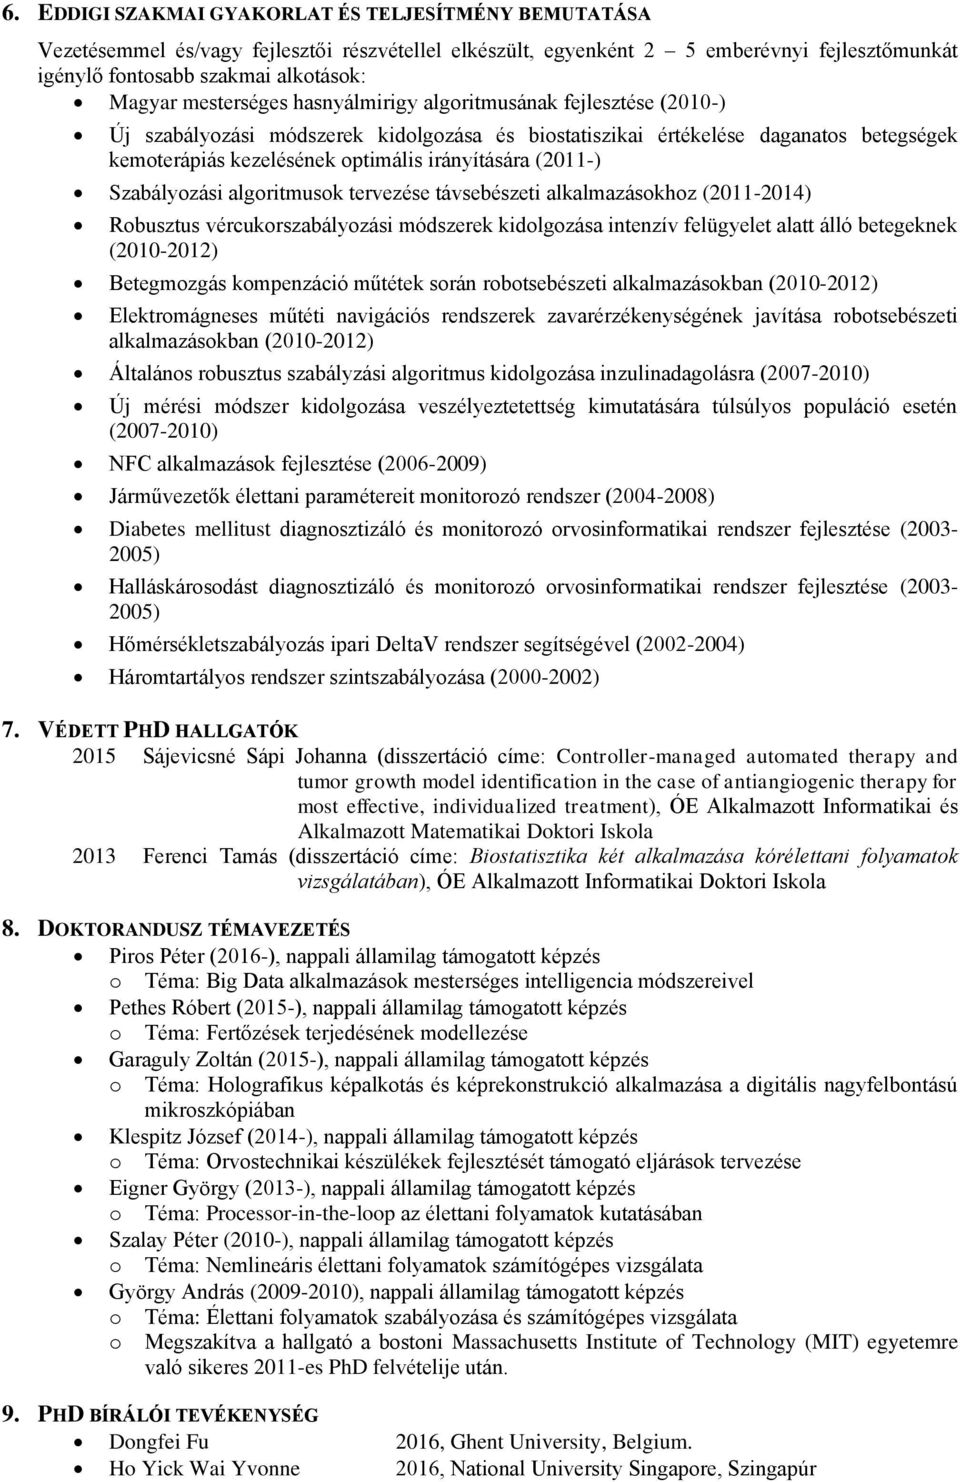 Prof. Dr. habil. Kovács Levente Adalbert - PDF Free Download